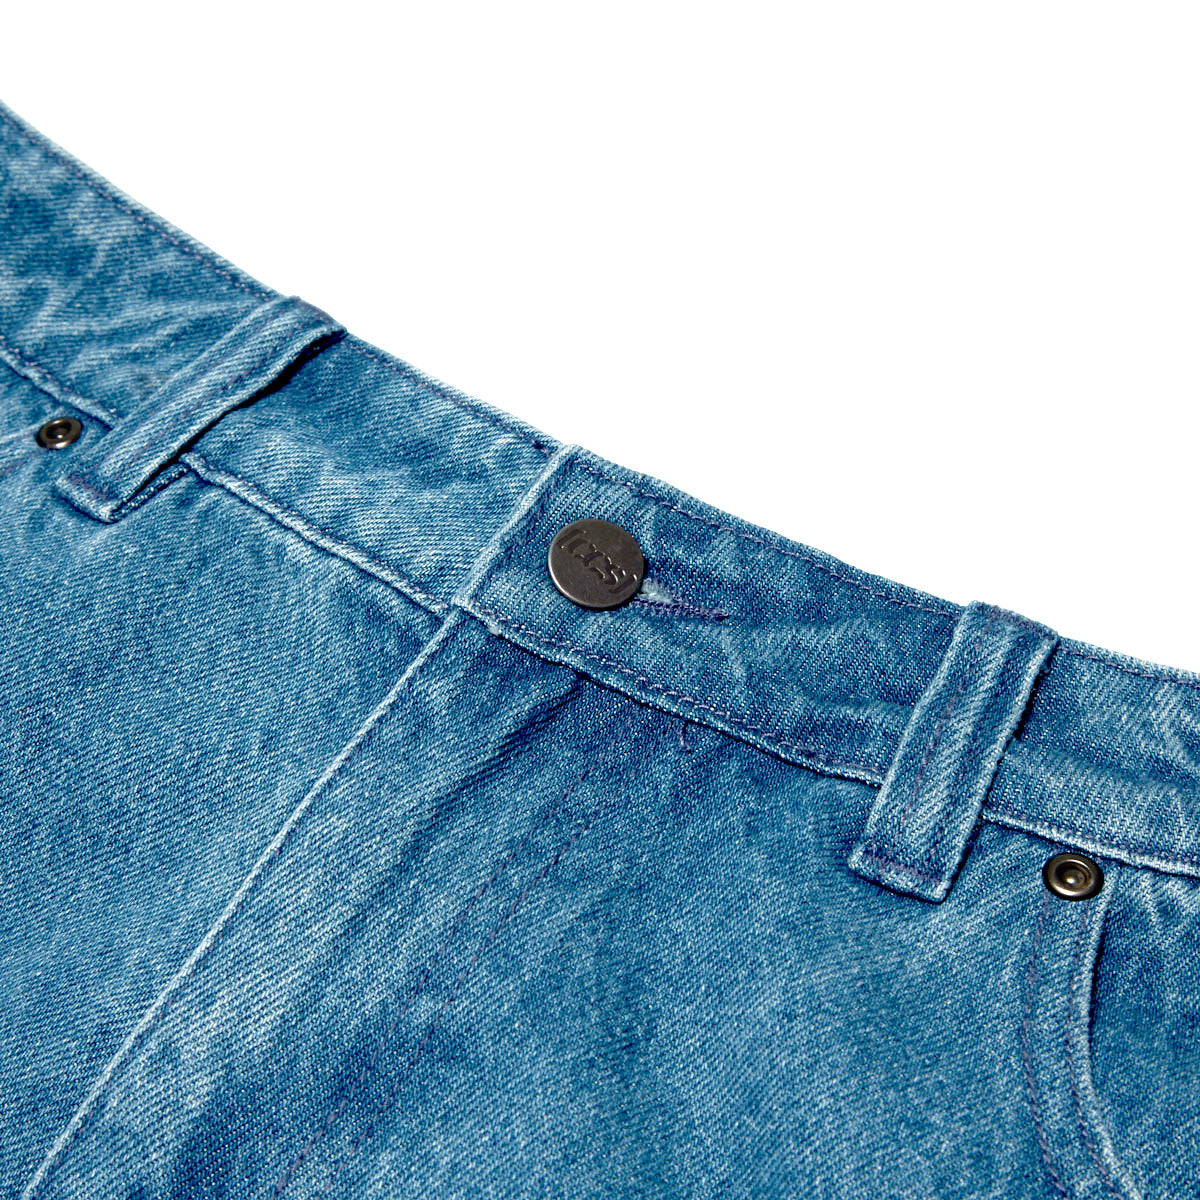 CCS Baggy Taper Denim Jeans - Medium Wash image 7